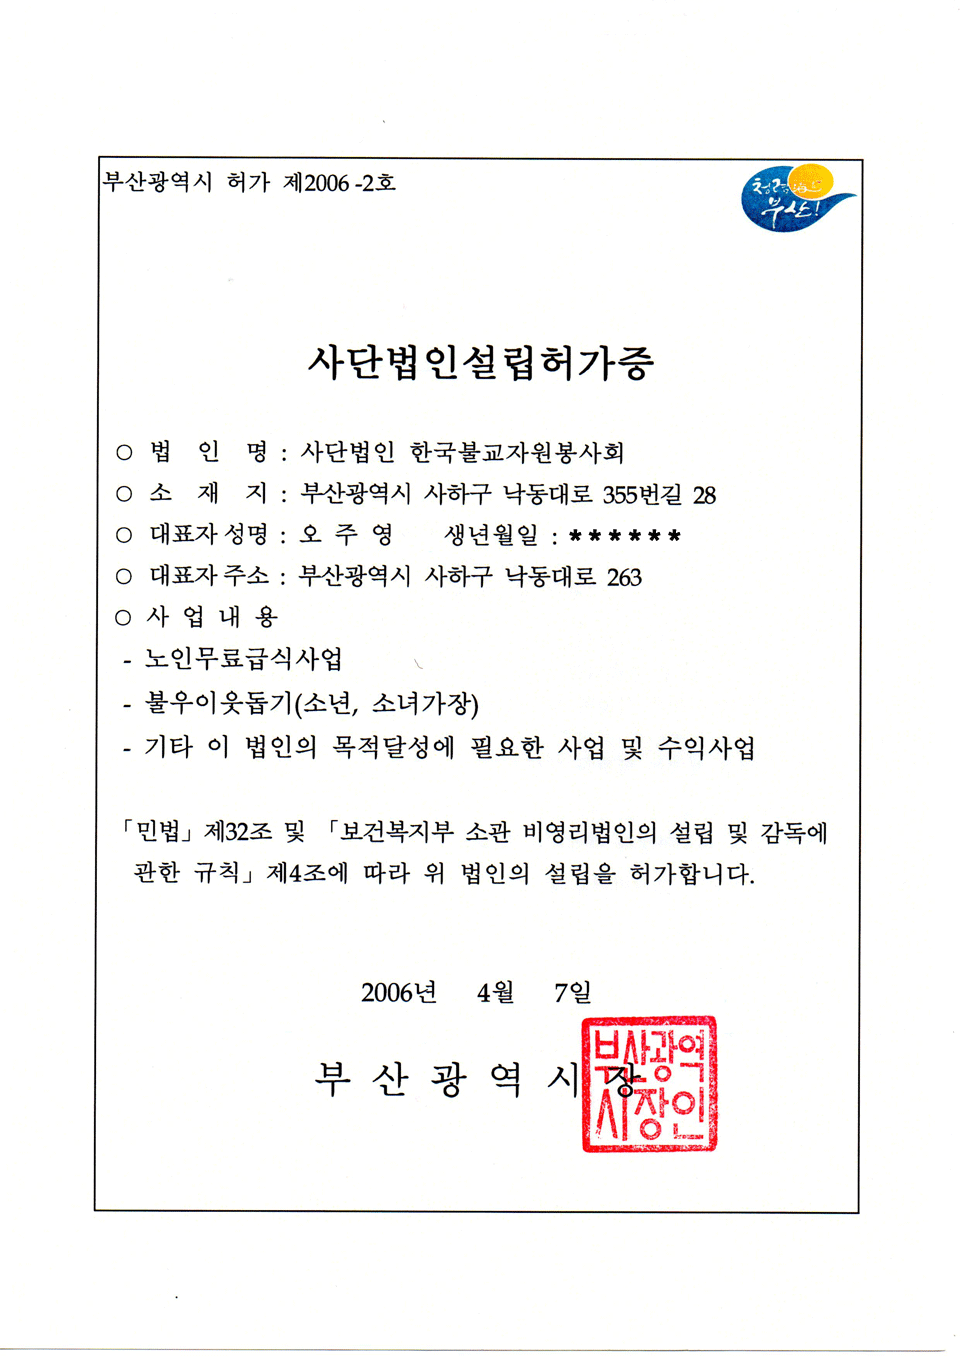 certificate_1.gif